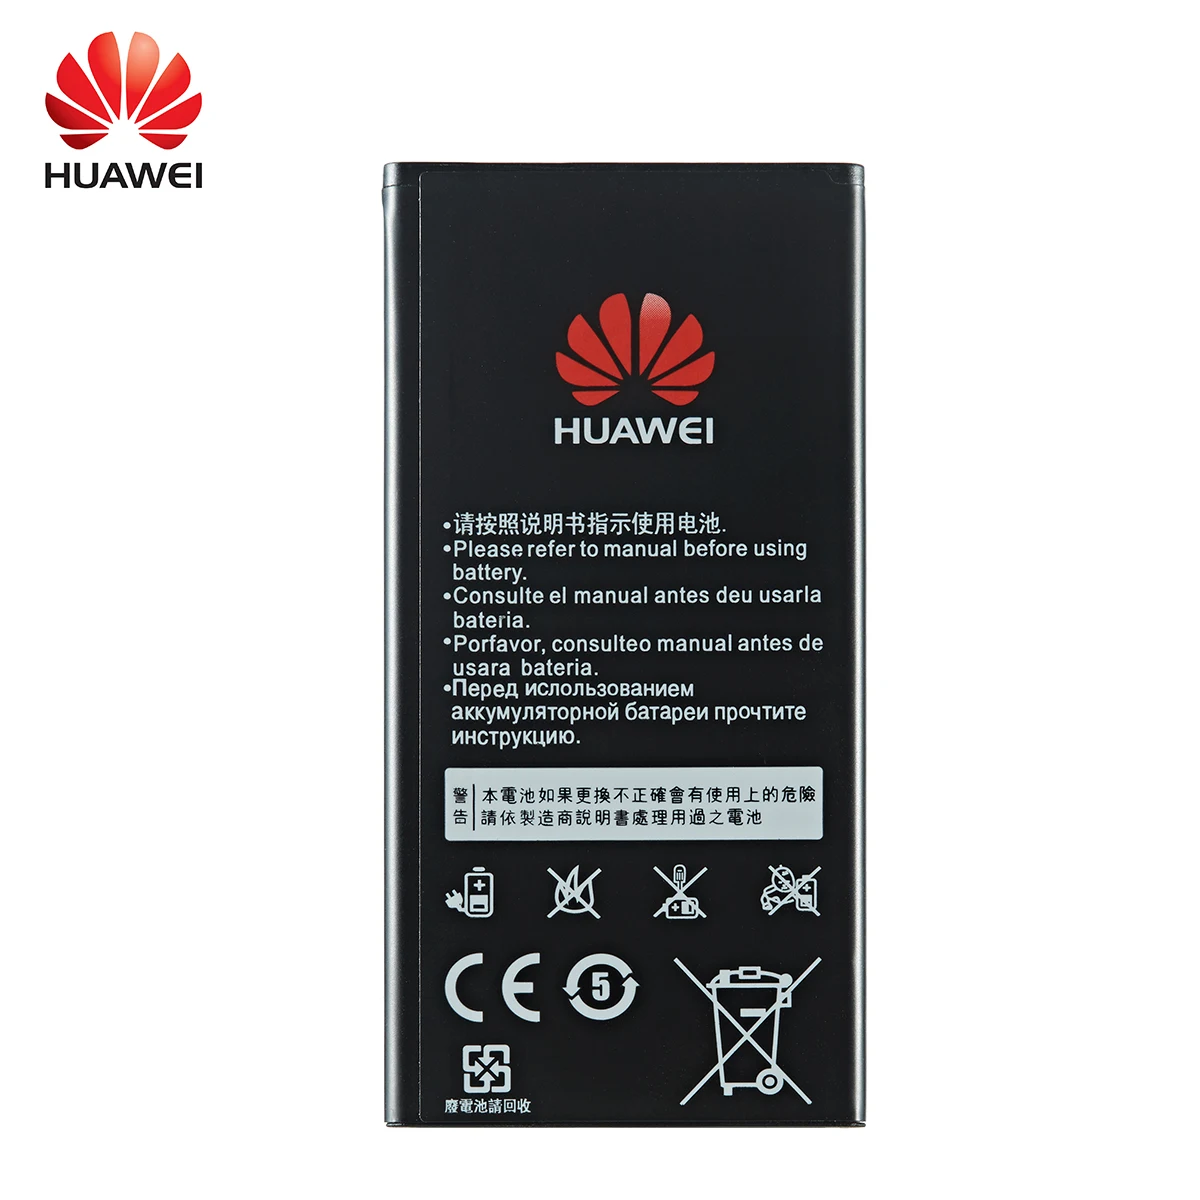 crocodile mode Regularity Cumpara online Orginal Huawei Hb474284rbc Baterie De 2000mah Pentru Huawei  Honor 3c Lite C8816 Y550 Y560 Y625 Y635 G521 G620 Y5 Telefon Mobil / Piese  telefoane mobile | Marchifsalon.ro